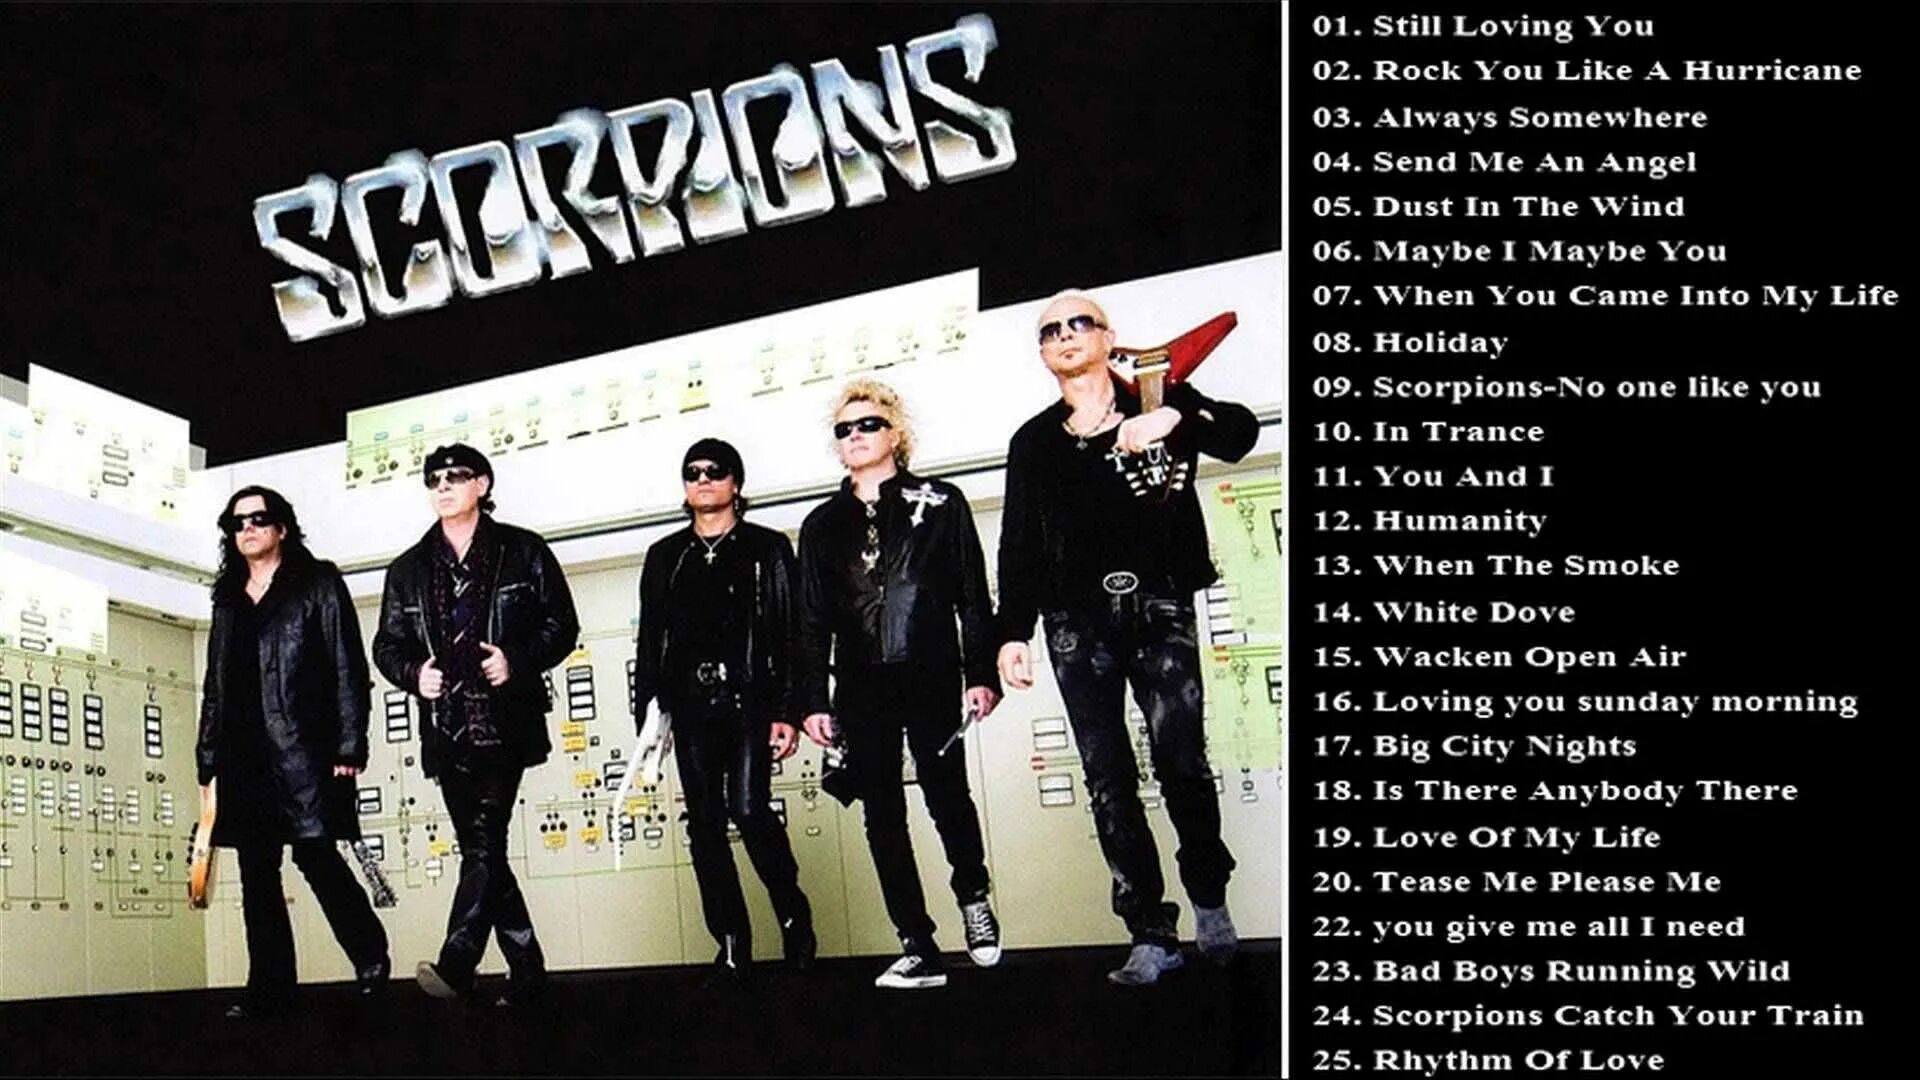 Scorpions Bad boys Running Wild. Scorpions still loving you текст. Scorpions Rhythm of Love. Scorpions time. Still love you scorpions текст